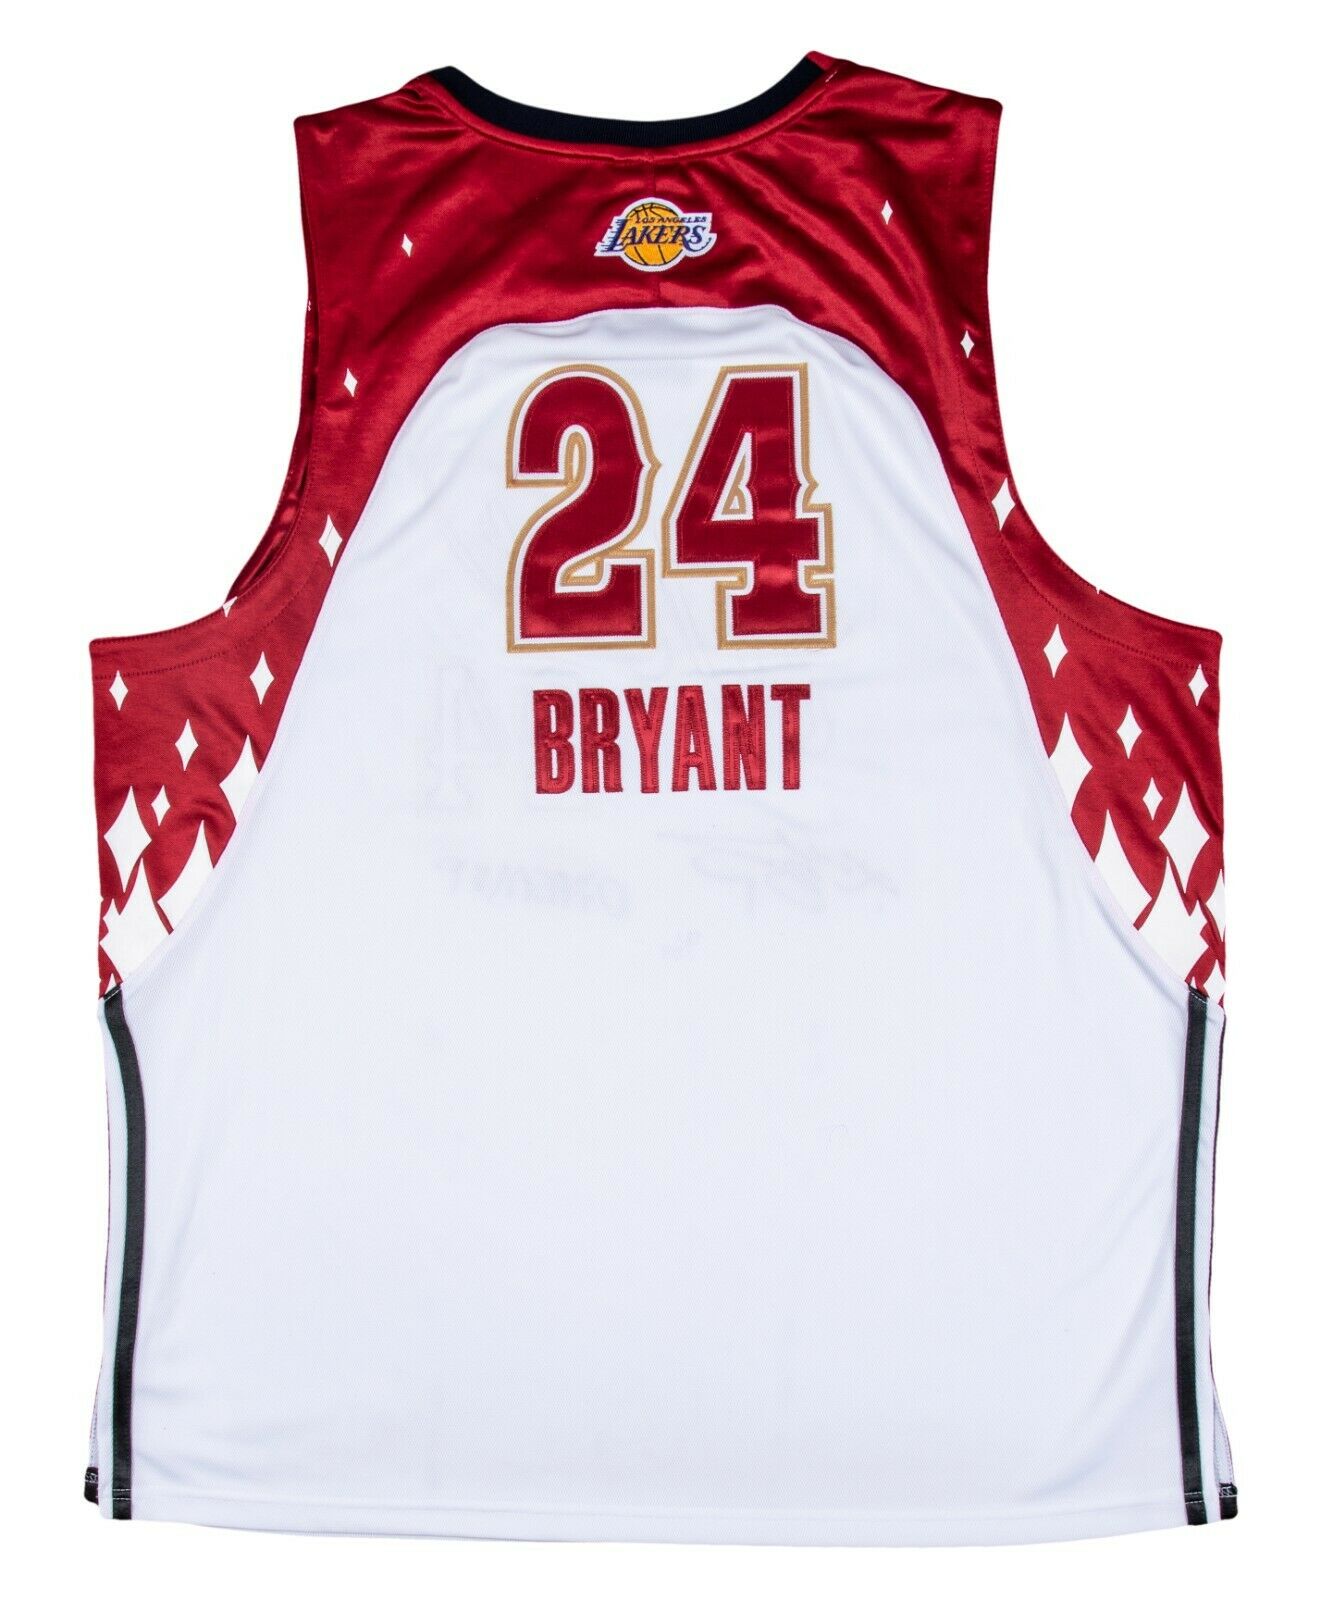 Kobe Bryant 2007 NBA All-Star Jersey for Sale in Las Vegas, NV